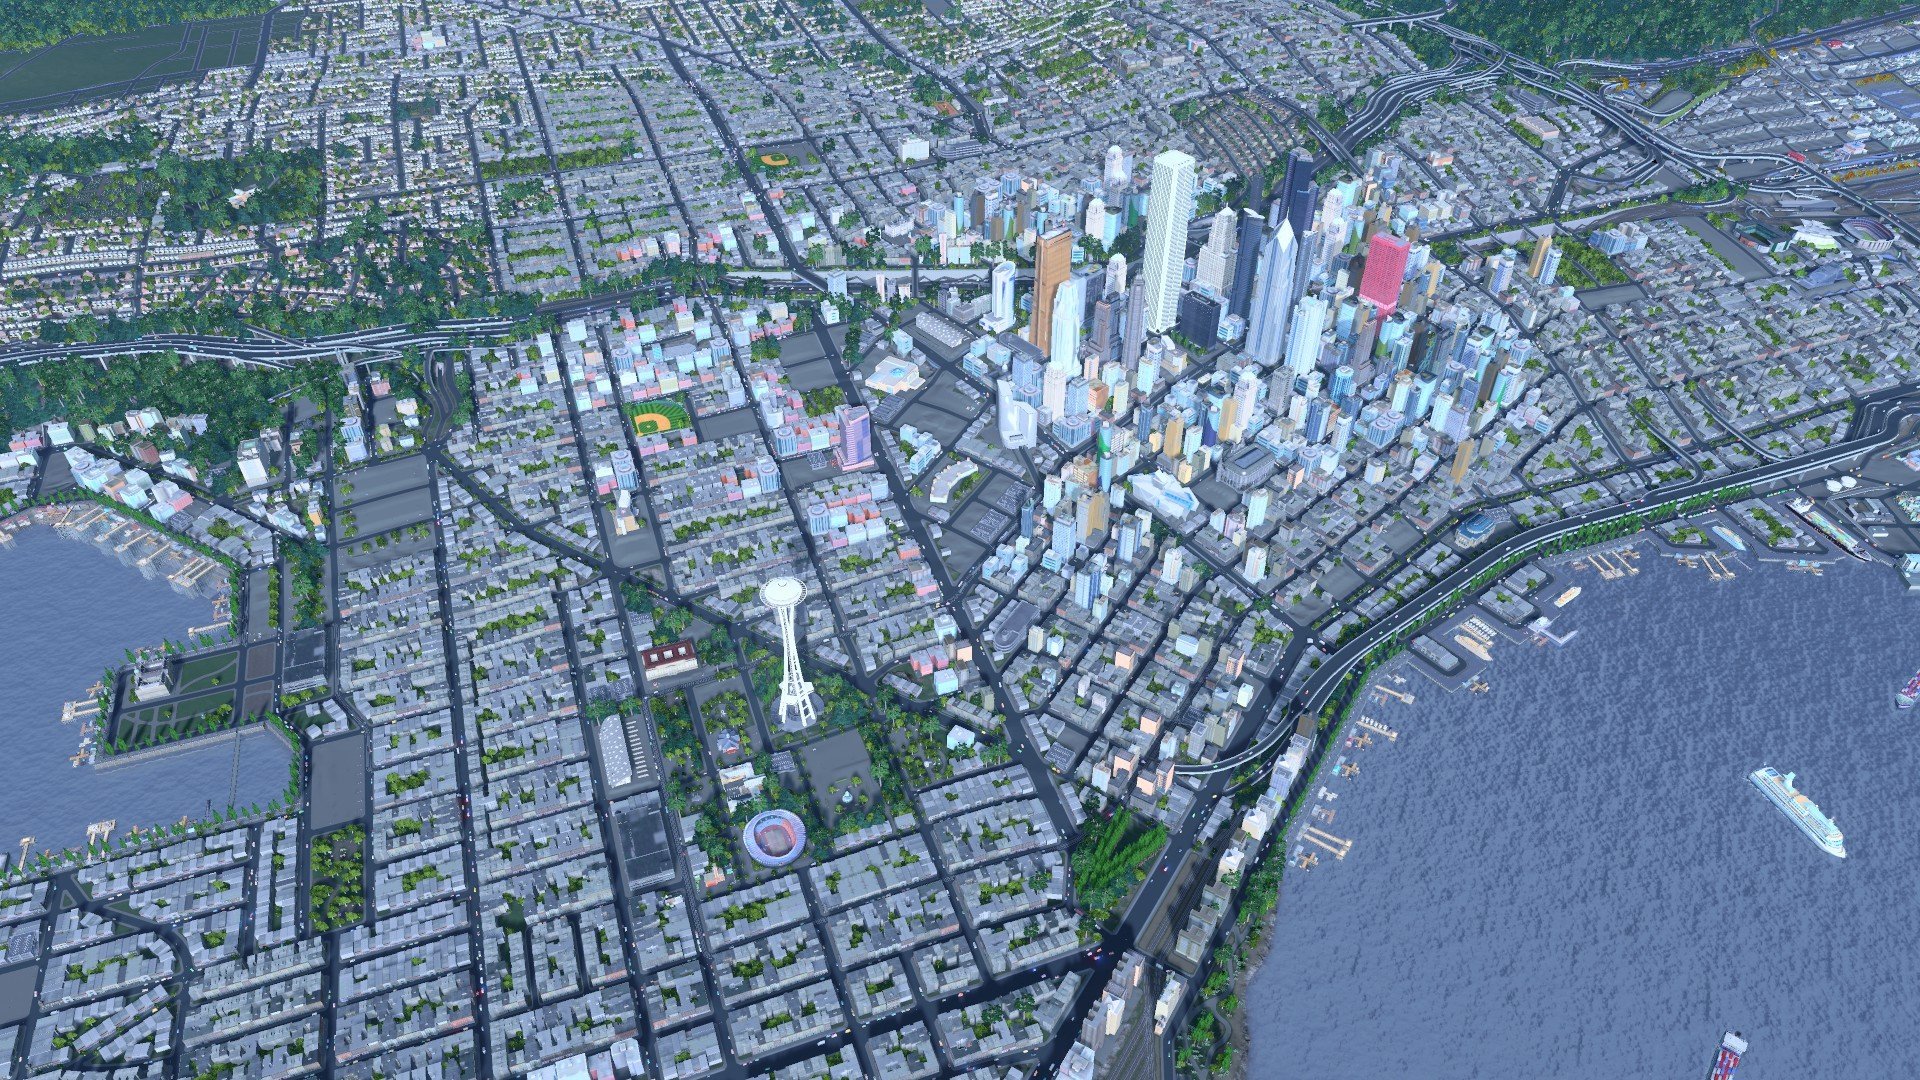 Cities: Skylines Ii Pc Jogo Digital